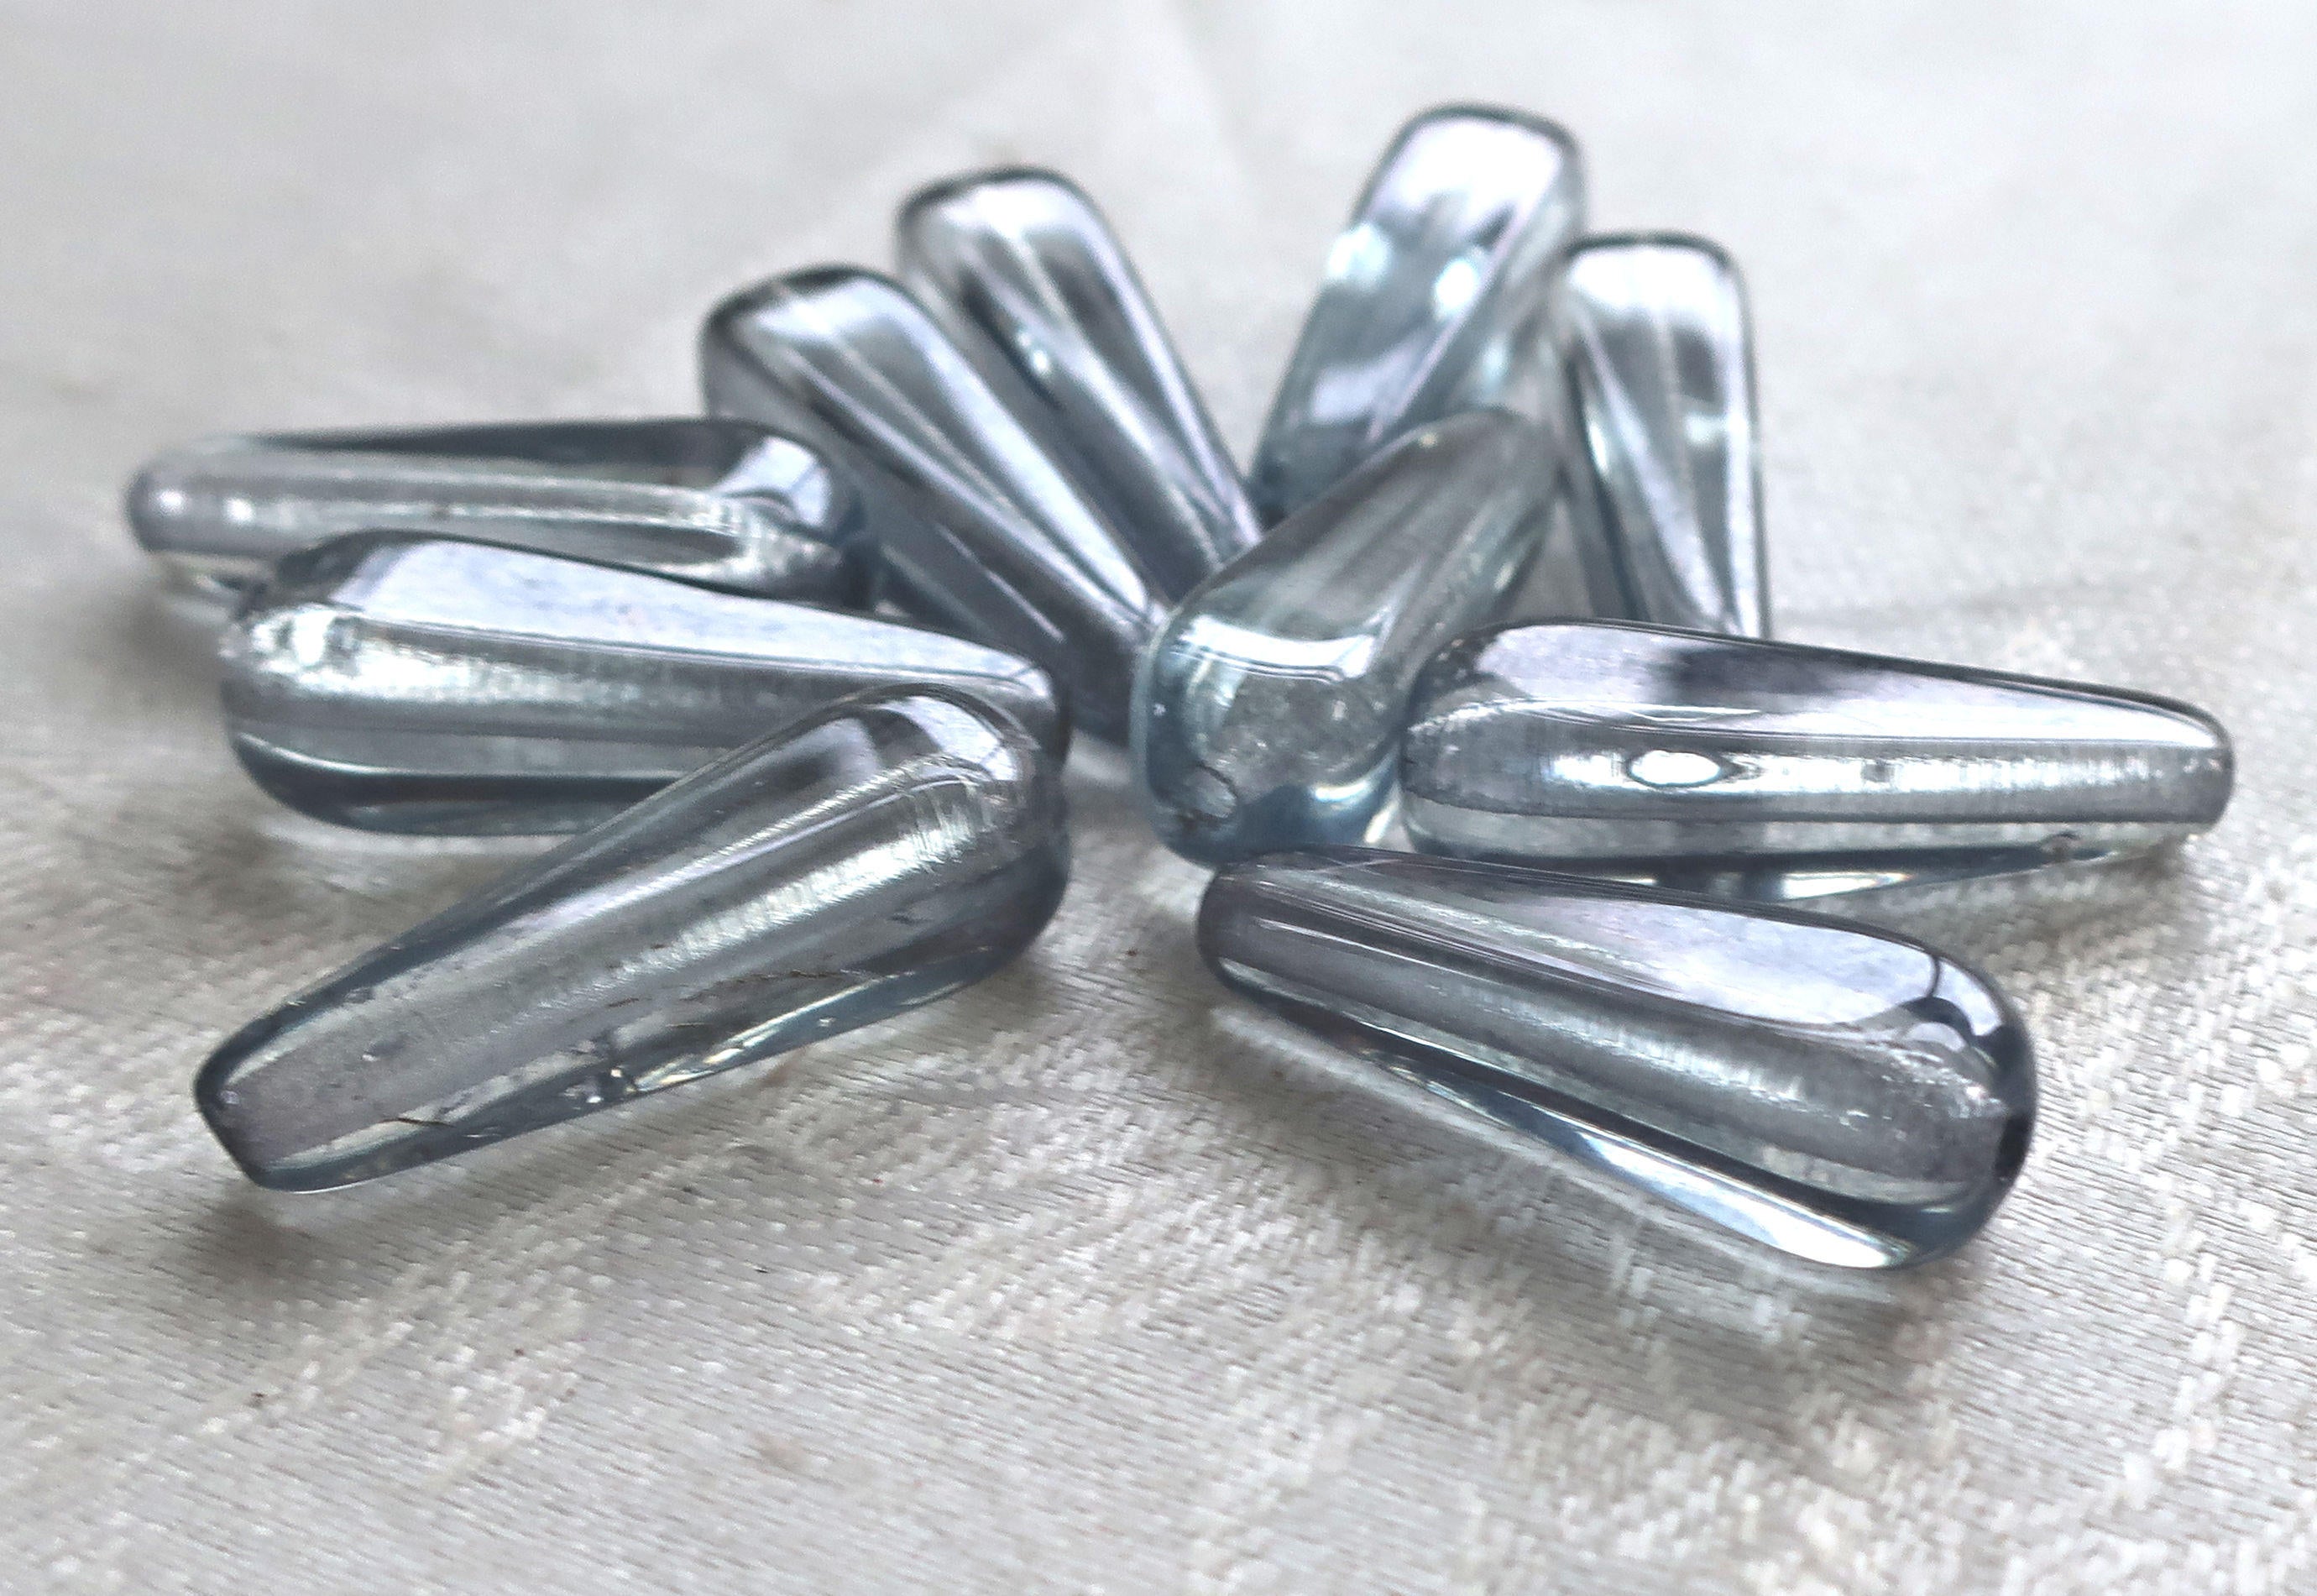 6x4 to 7x5mm Chilean Lapis Teardrop Beads – Columbia Gem House